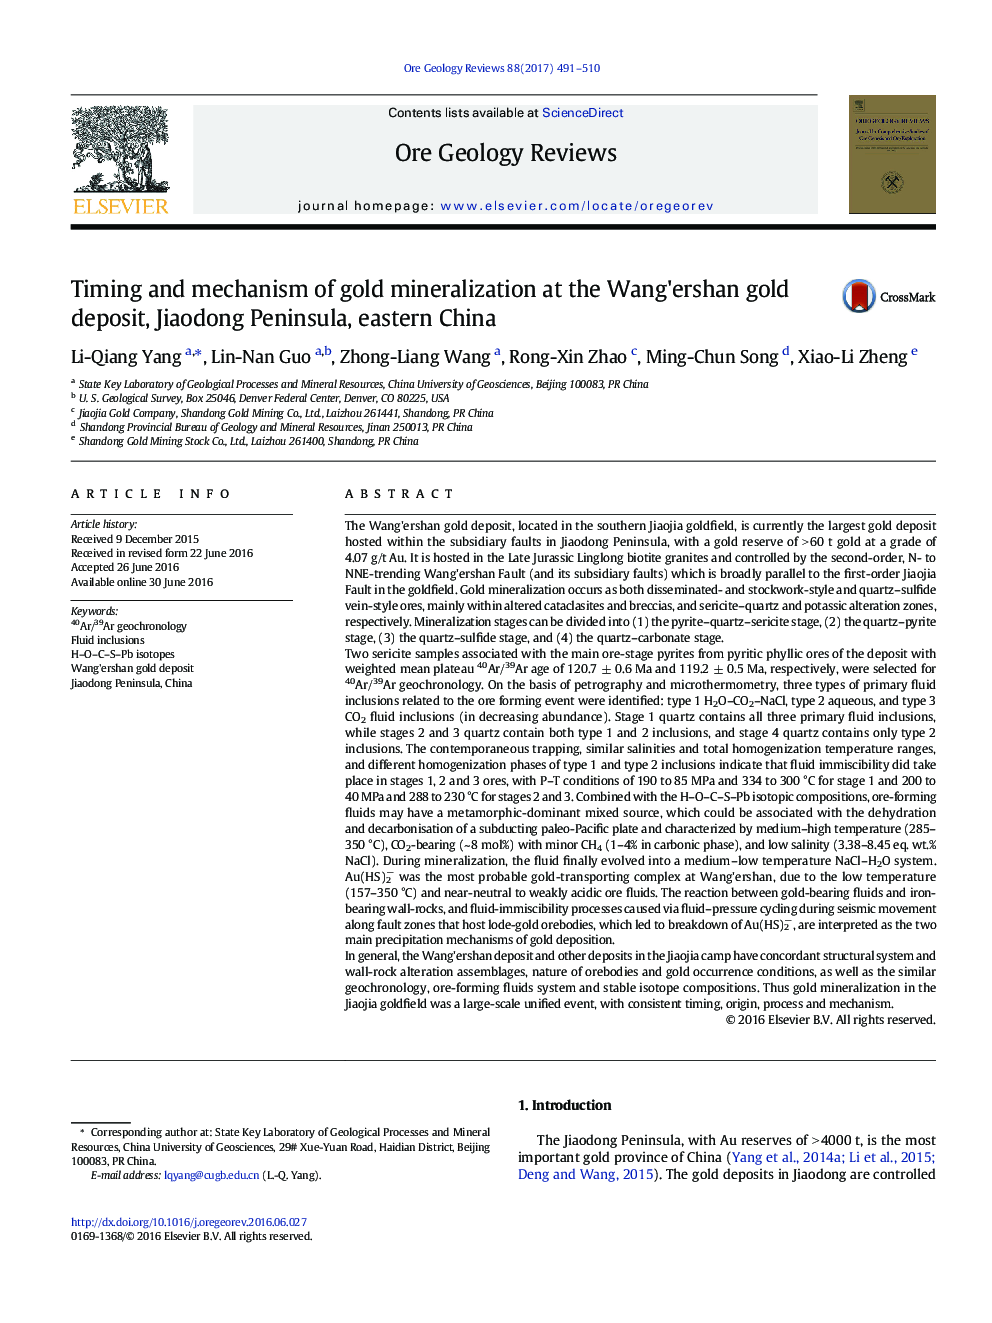 Timing and mechanism of gold mineralization at the Wang'ershan gold deposit, Jiaodong Peninsula, eastern China